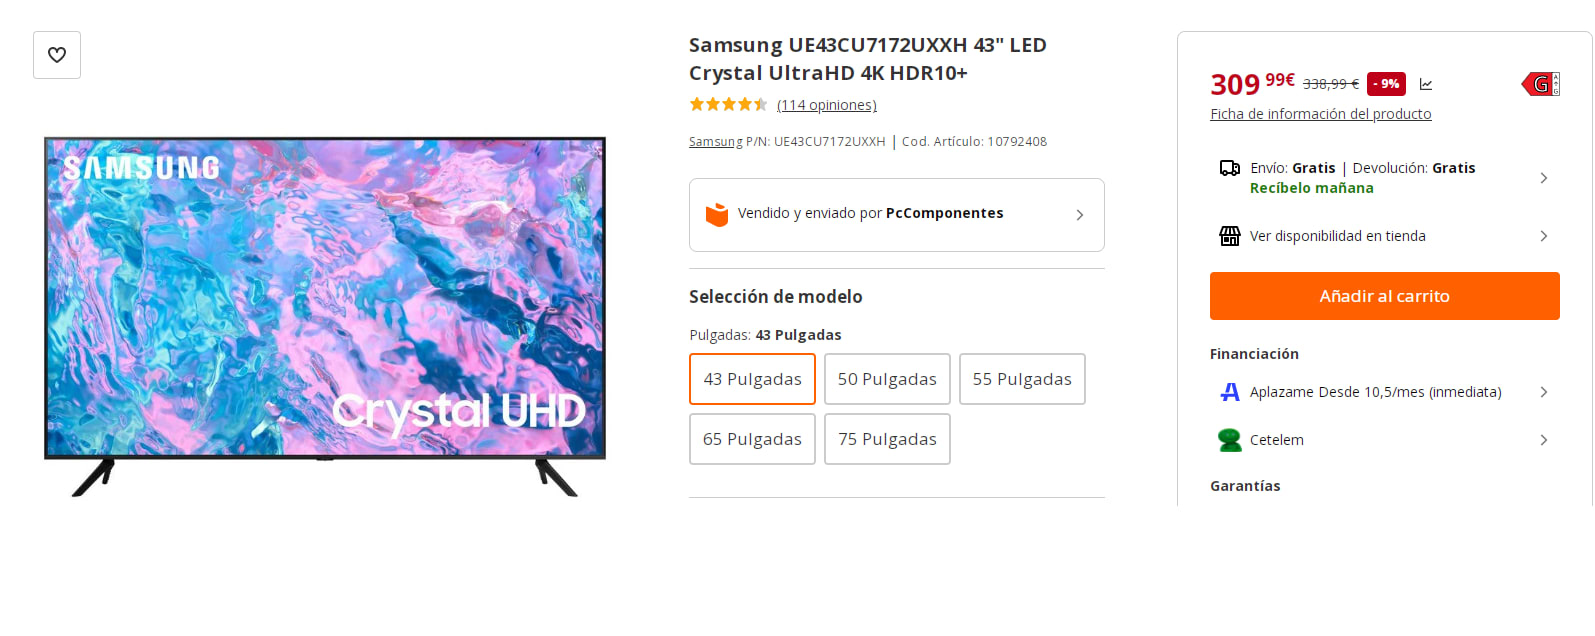 Samsung UE43CU7172UXXH 43 LED Crystal UltraHD 4K HDR10+